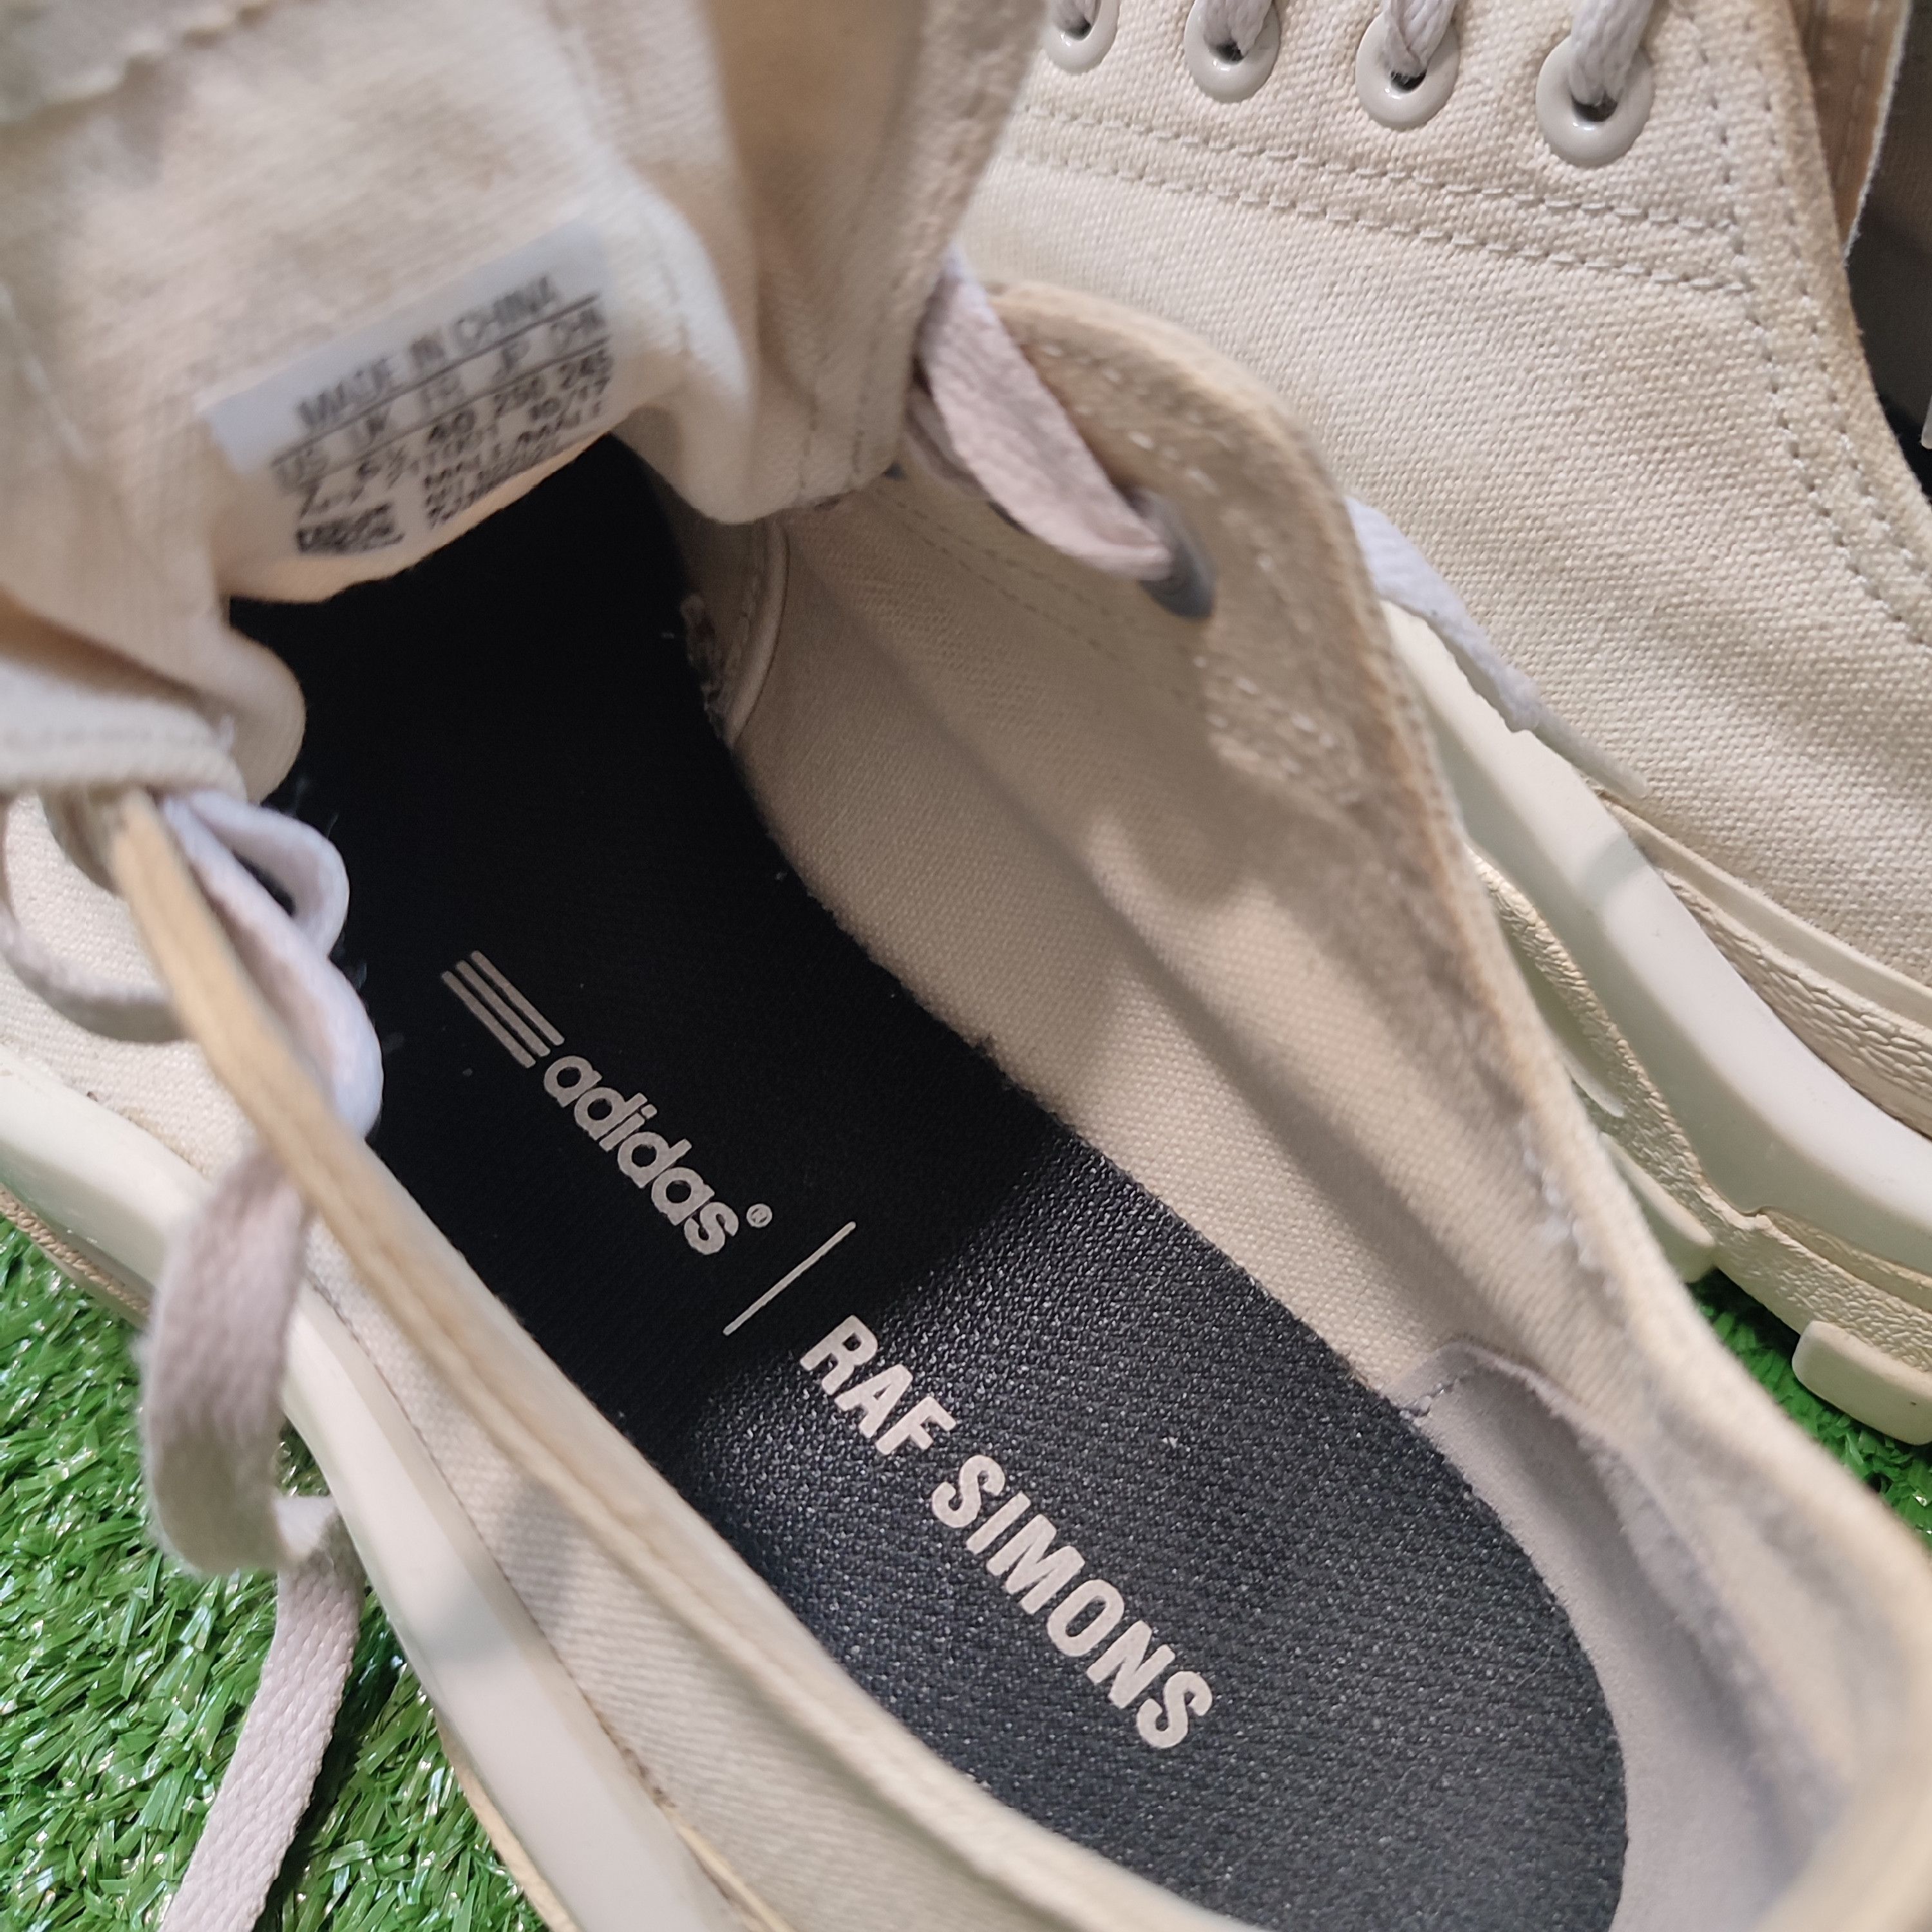 Adidas - Rafs Simons - Detroit Runner Sneakers - 10